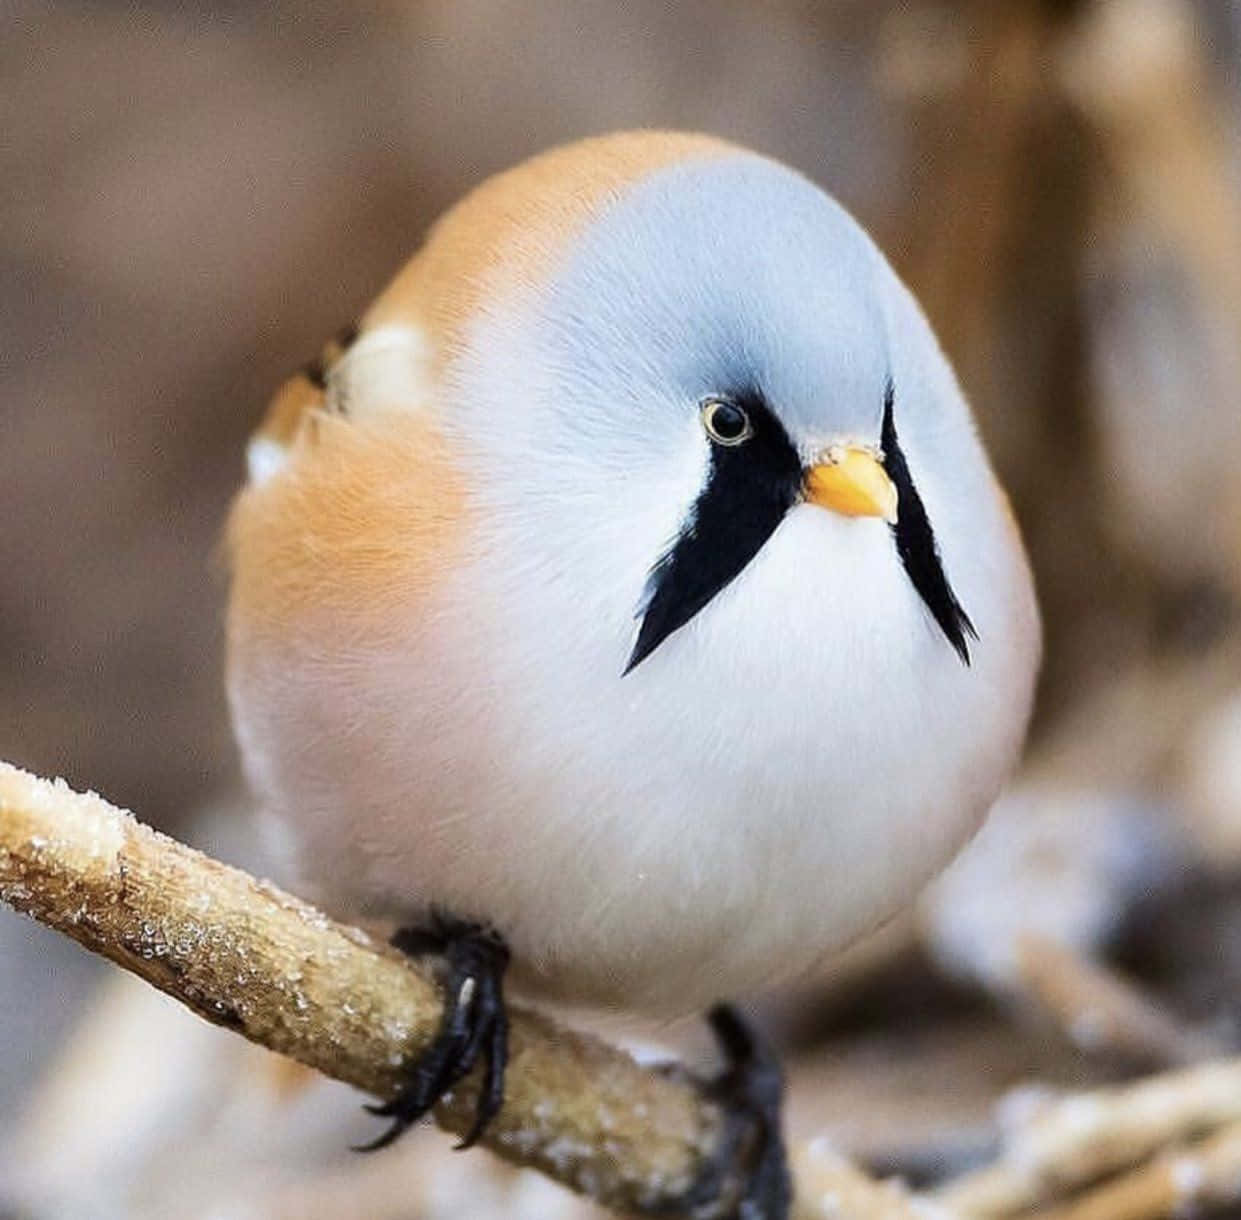 Image  A Close-Up of a Cute Bird